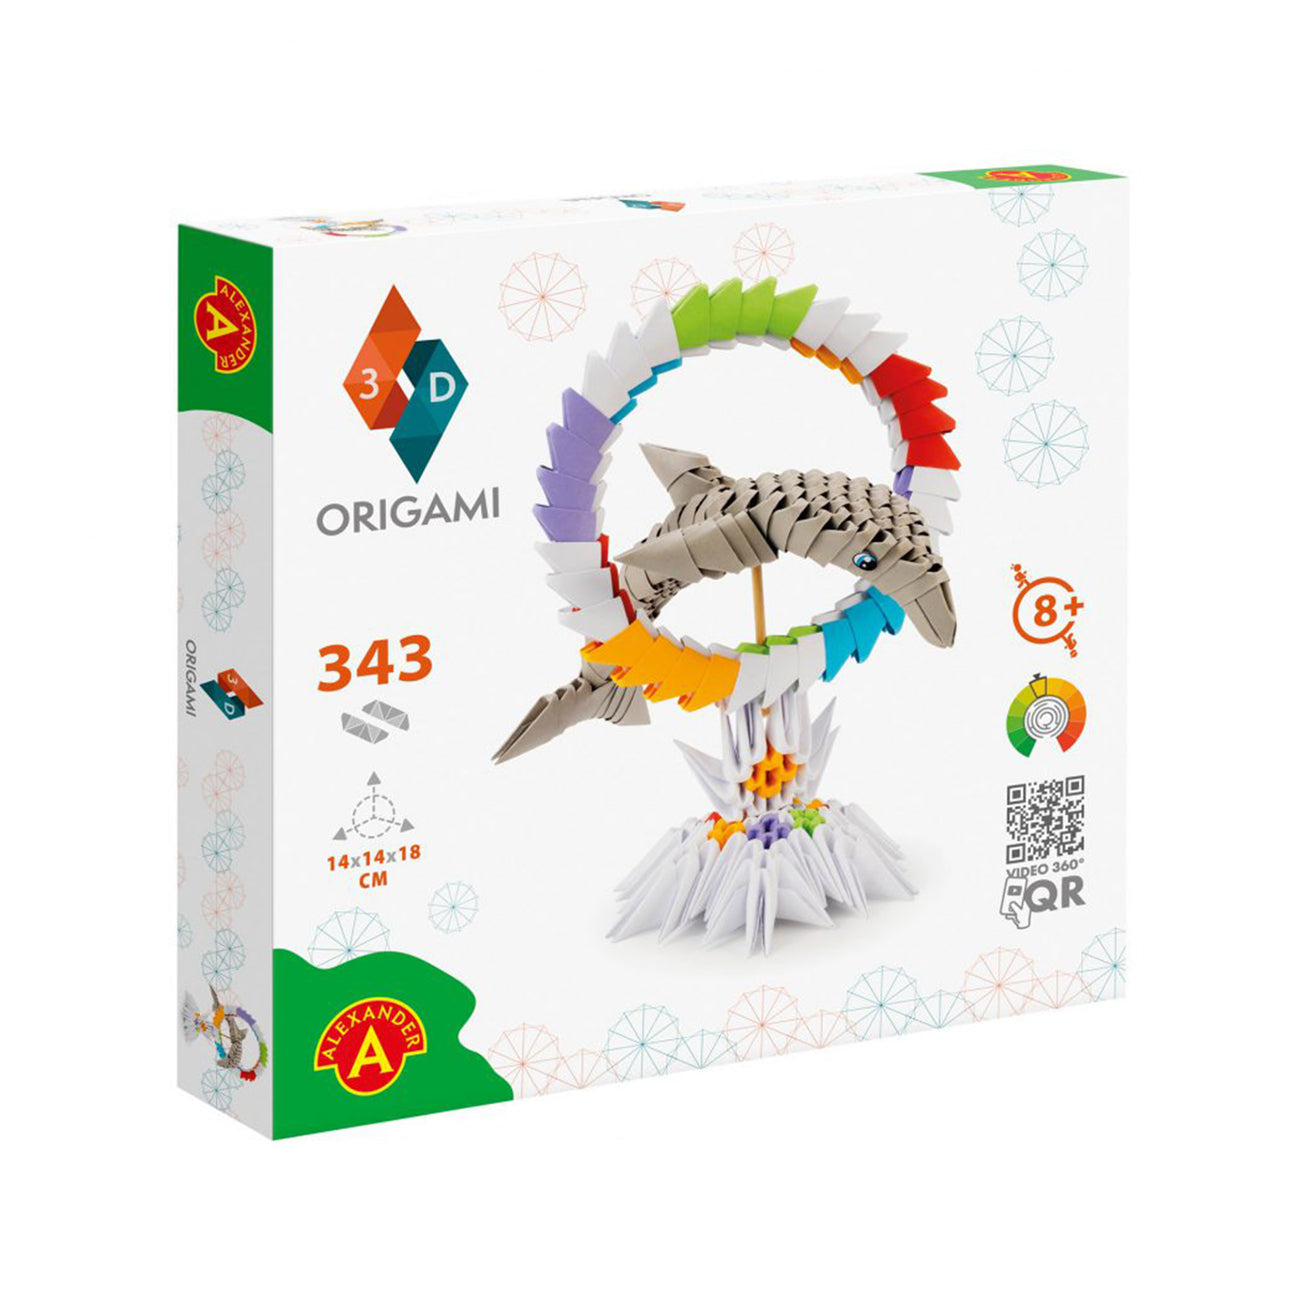 Kit Origami 3D Delfin +8 ani, Alexander Games